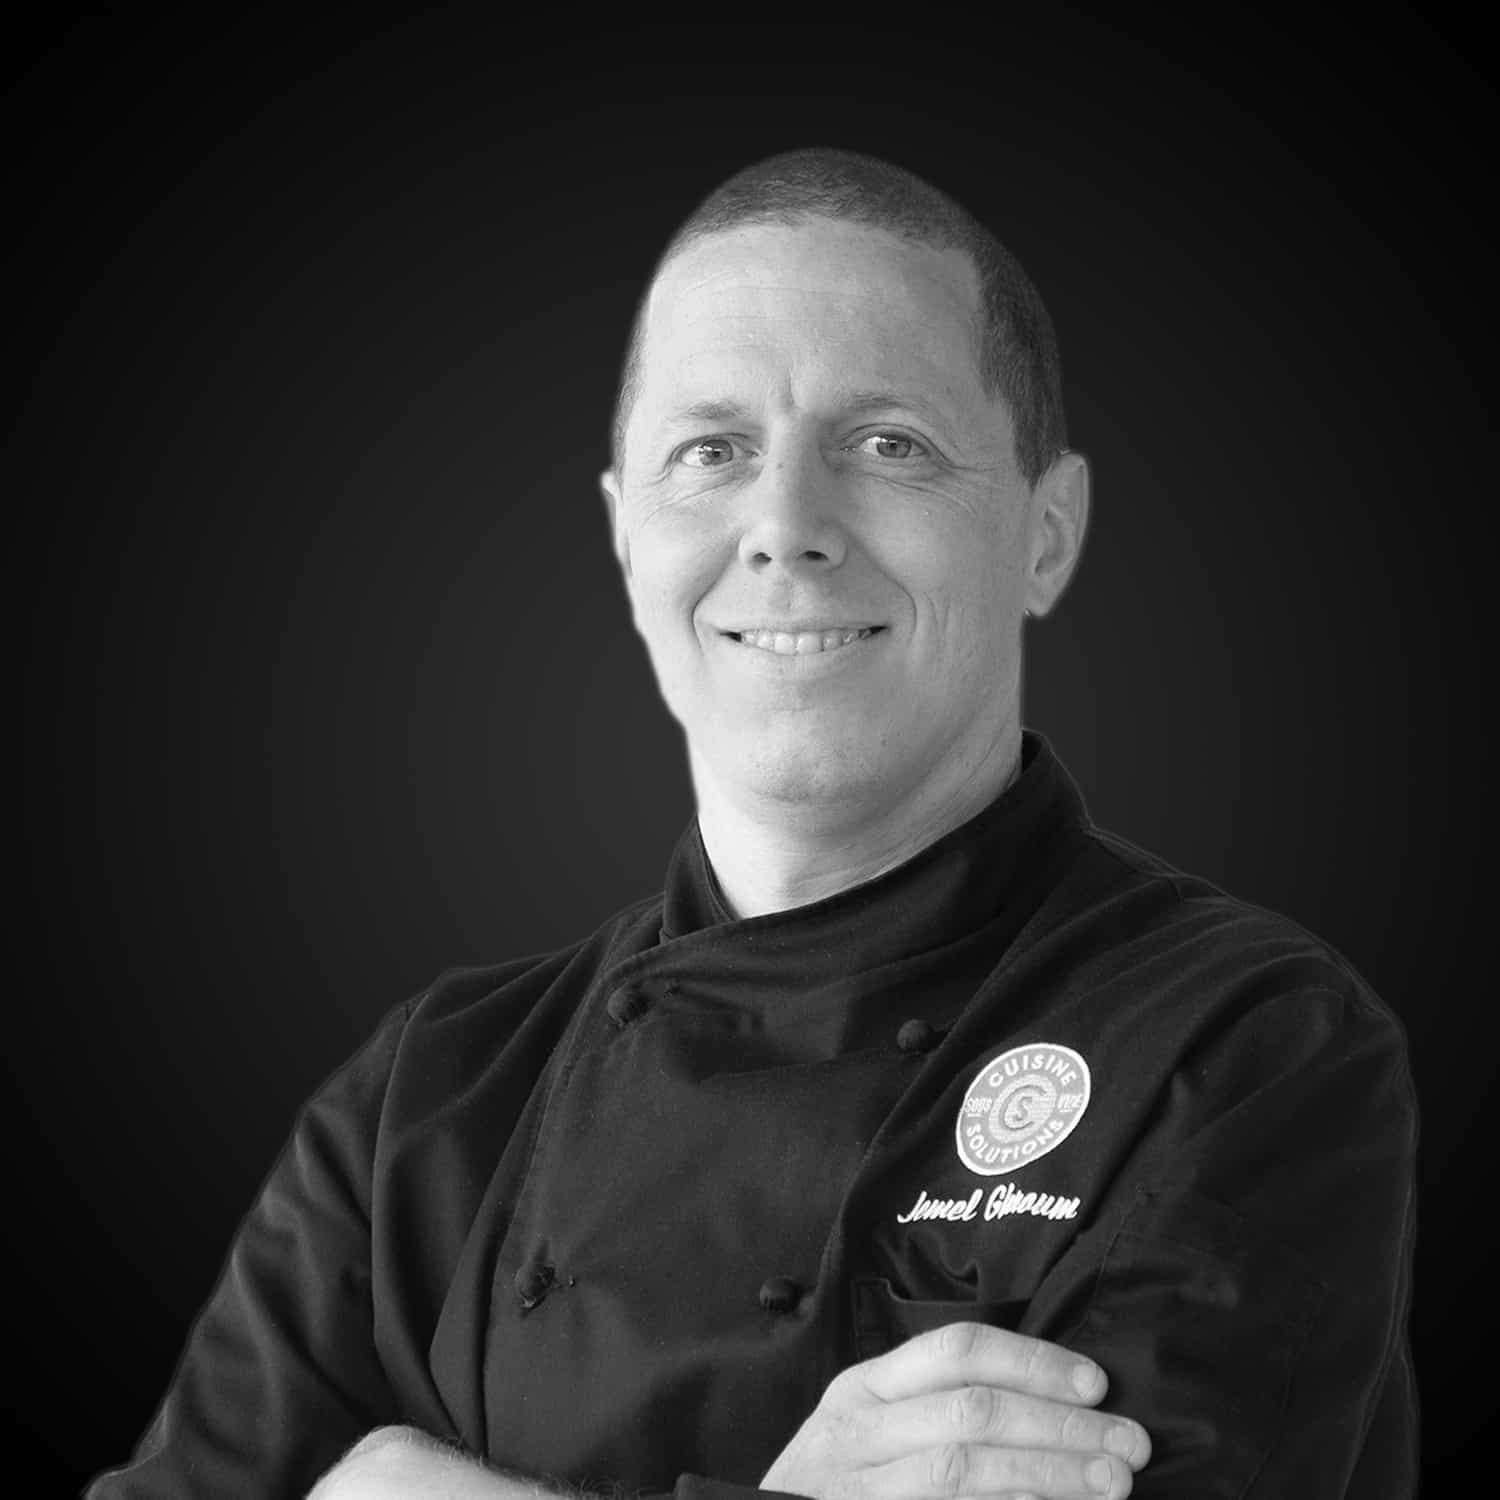 Portrait of Chef Jemel Ghroum